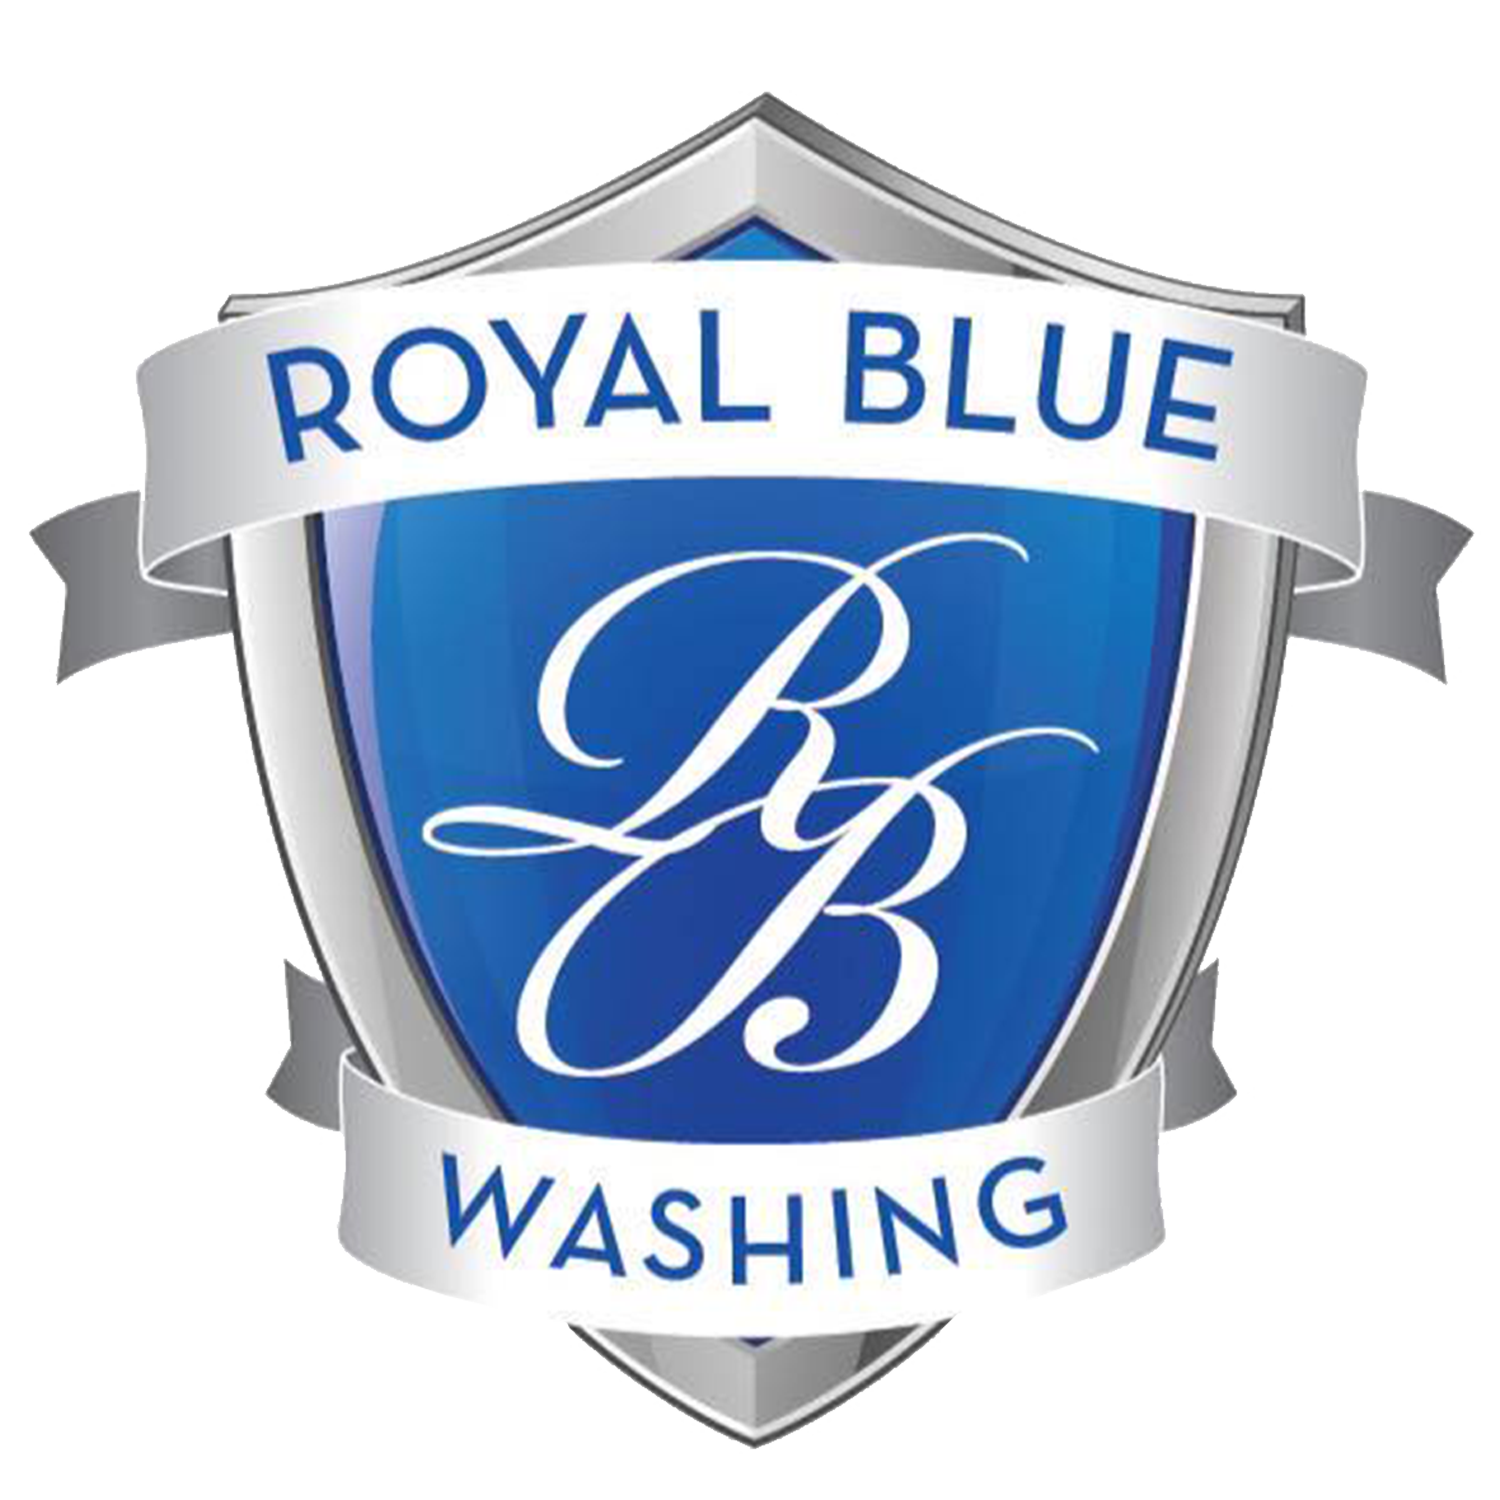 Royal Blue Washing